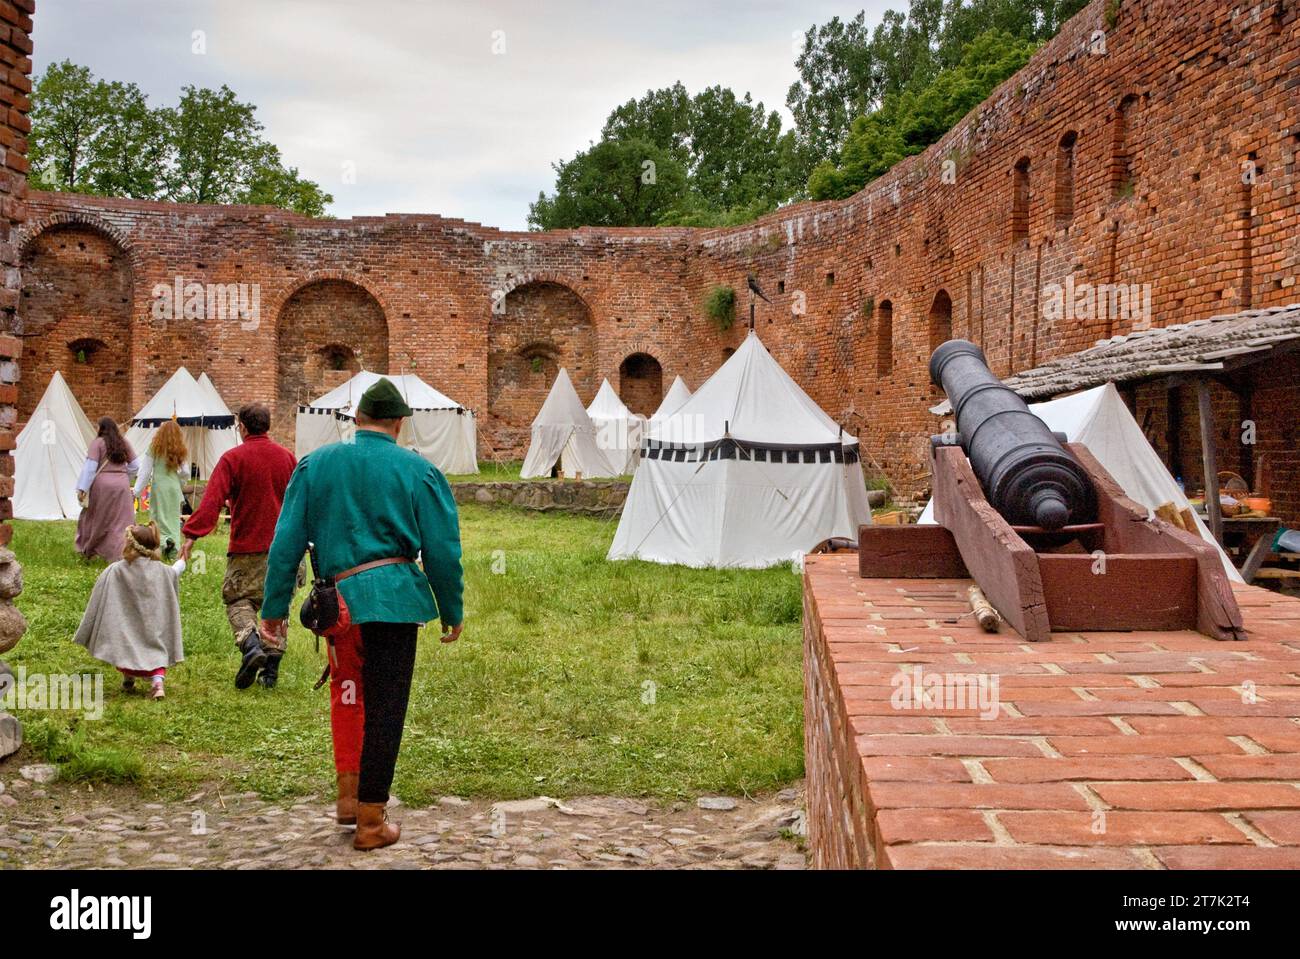 Historic reenactment at courtyard of medieval castle at Międzyrzecz, Lubuskie Voivodeship,  Poland Stock Photo